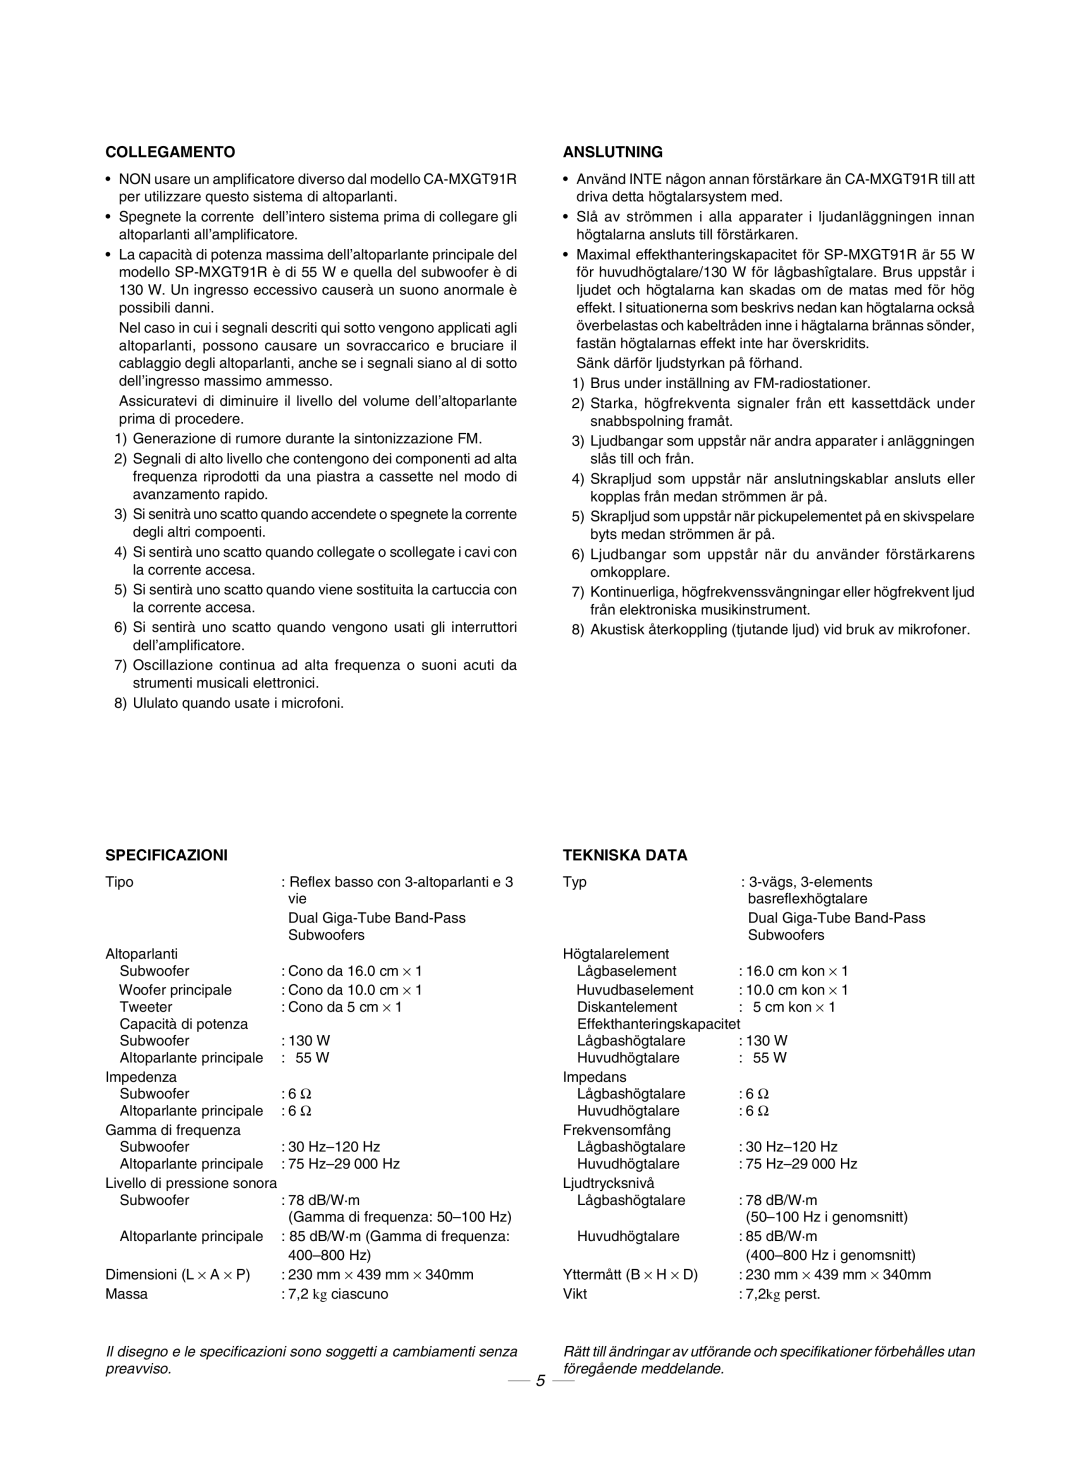 JVC CA-MXGT91R manual Collegamento, Anslutning, Specificazioni, Tekniska Data 